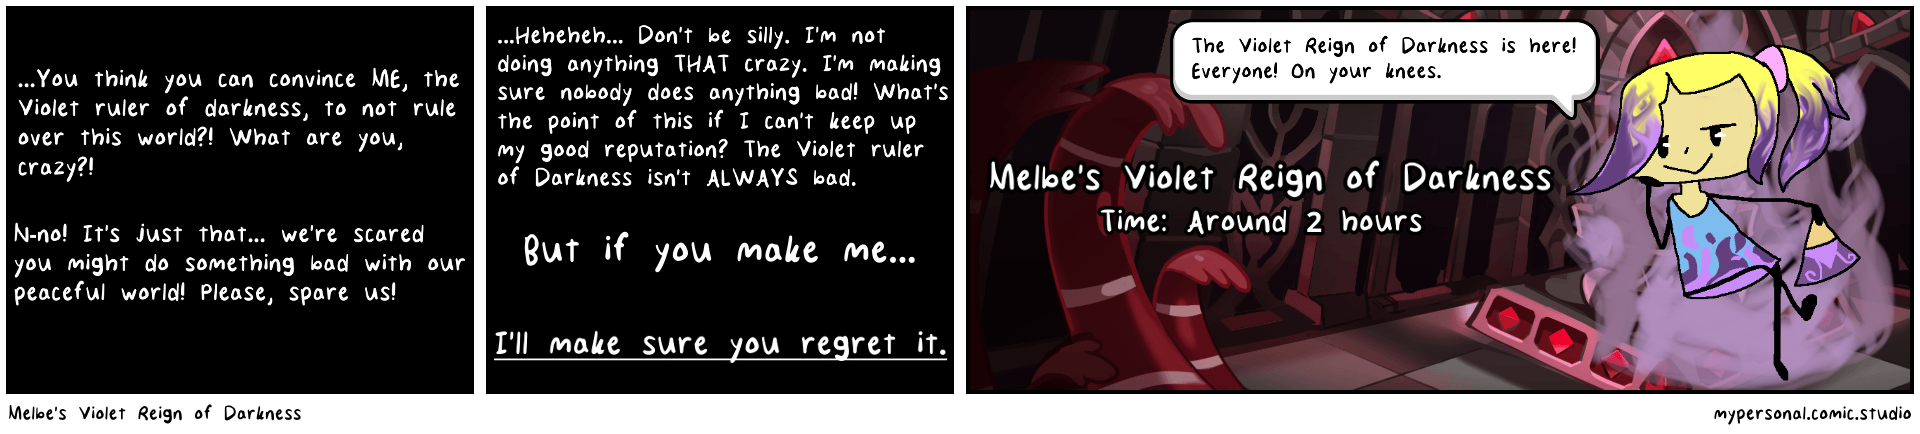 Melbe's Violet Reign of Darkness